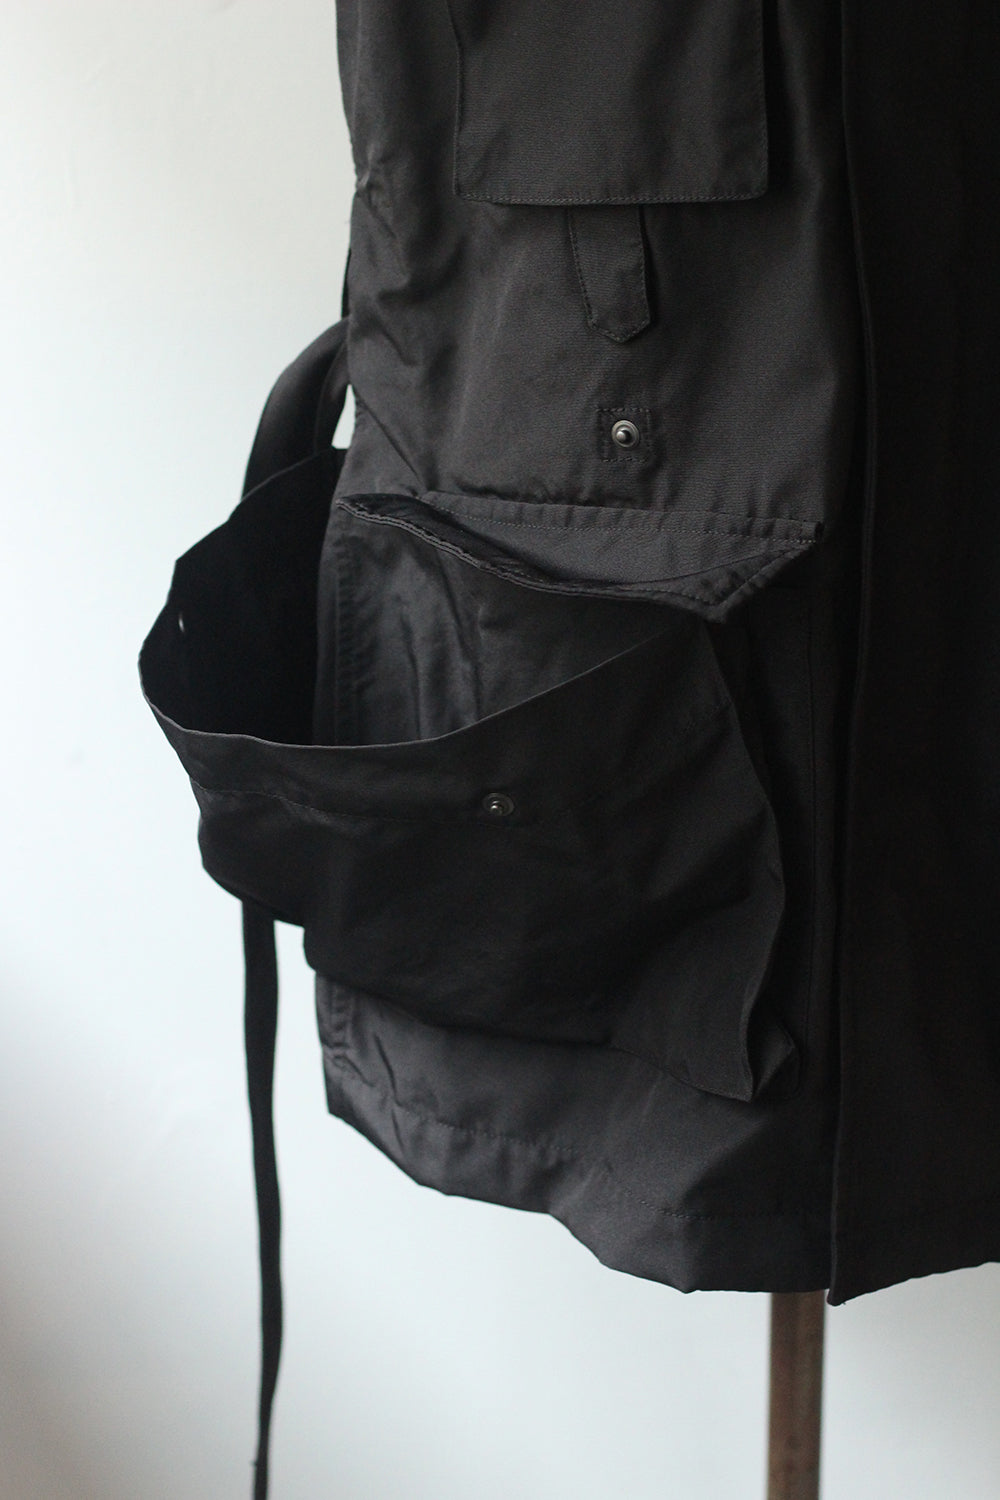 JUN MIKAMI "variable jacket" (black)